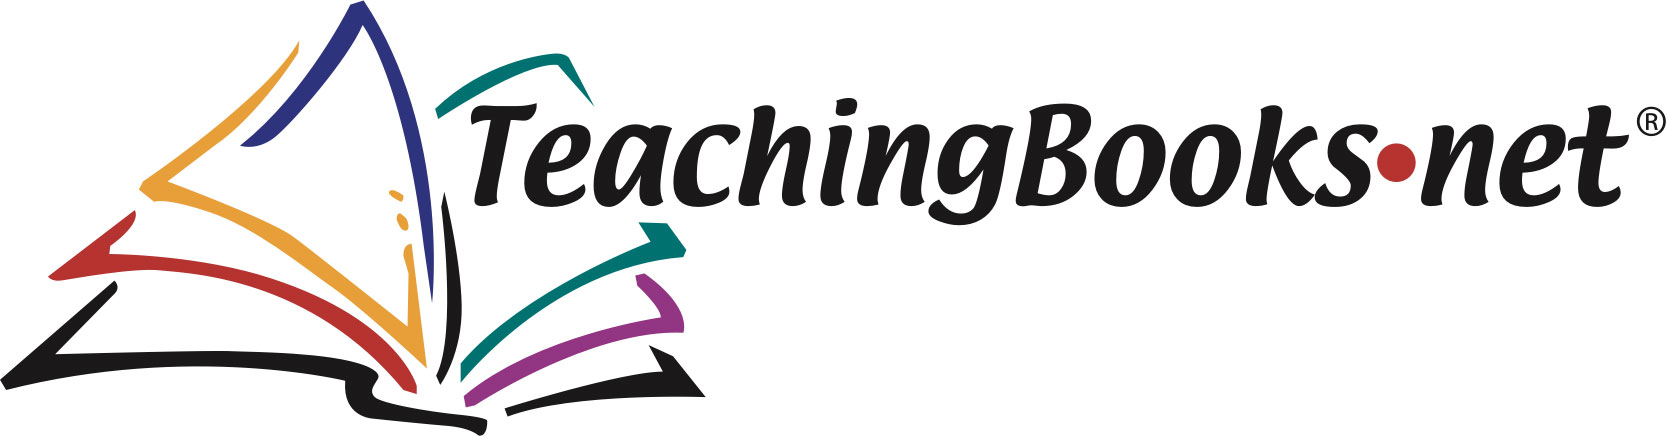 TeachingBooks.net logo